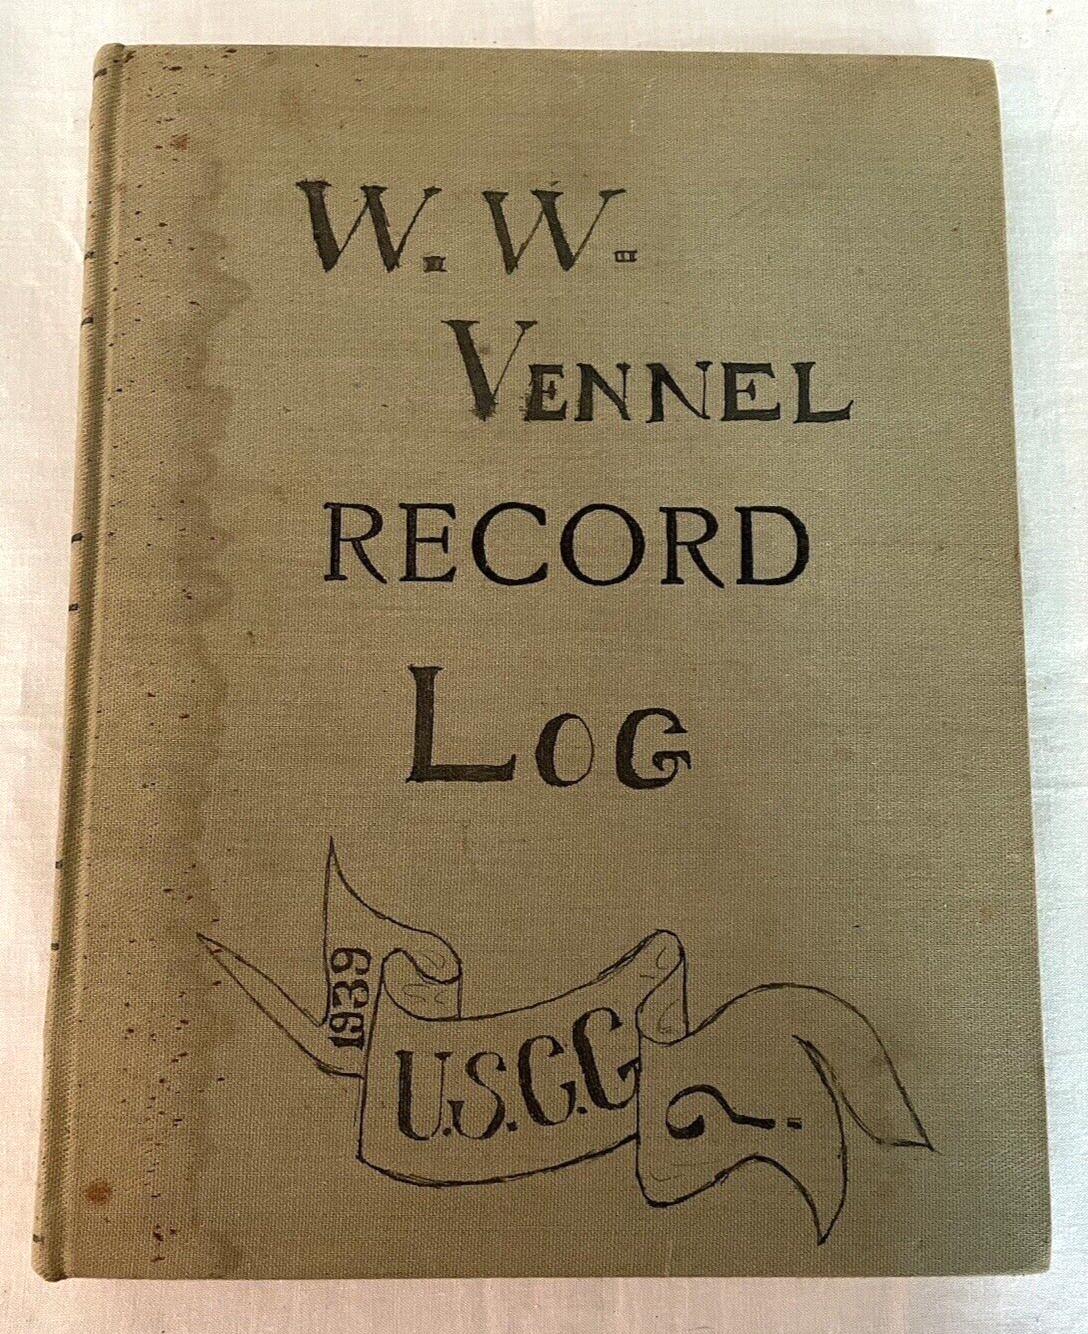 USN USCG RECORD FLIGHT LOG JOURNEL CAPTAIN WOODROW W. VENNEL 1939-1970